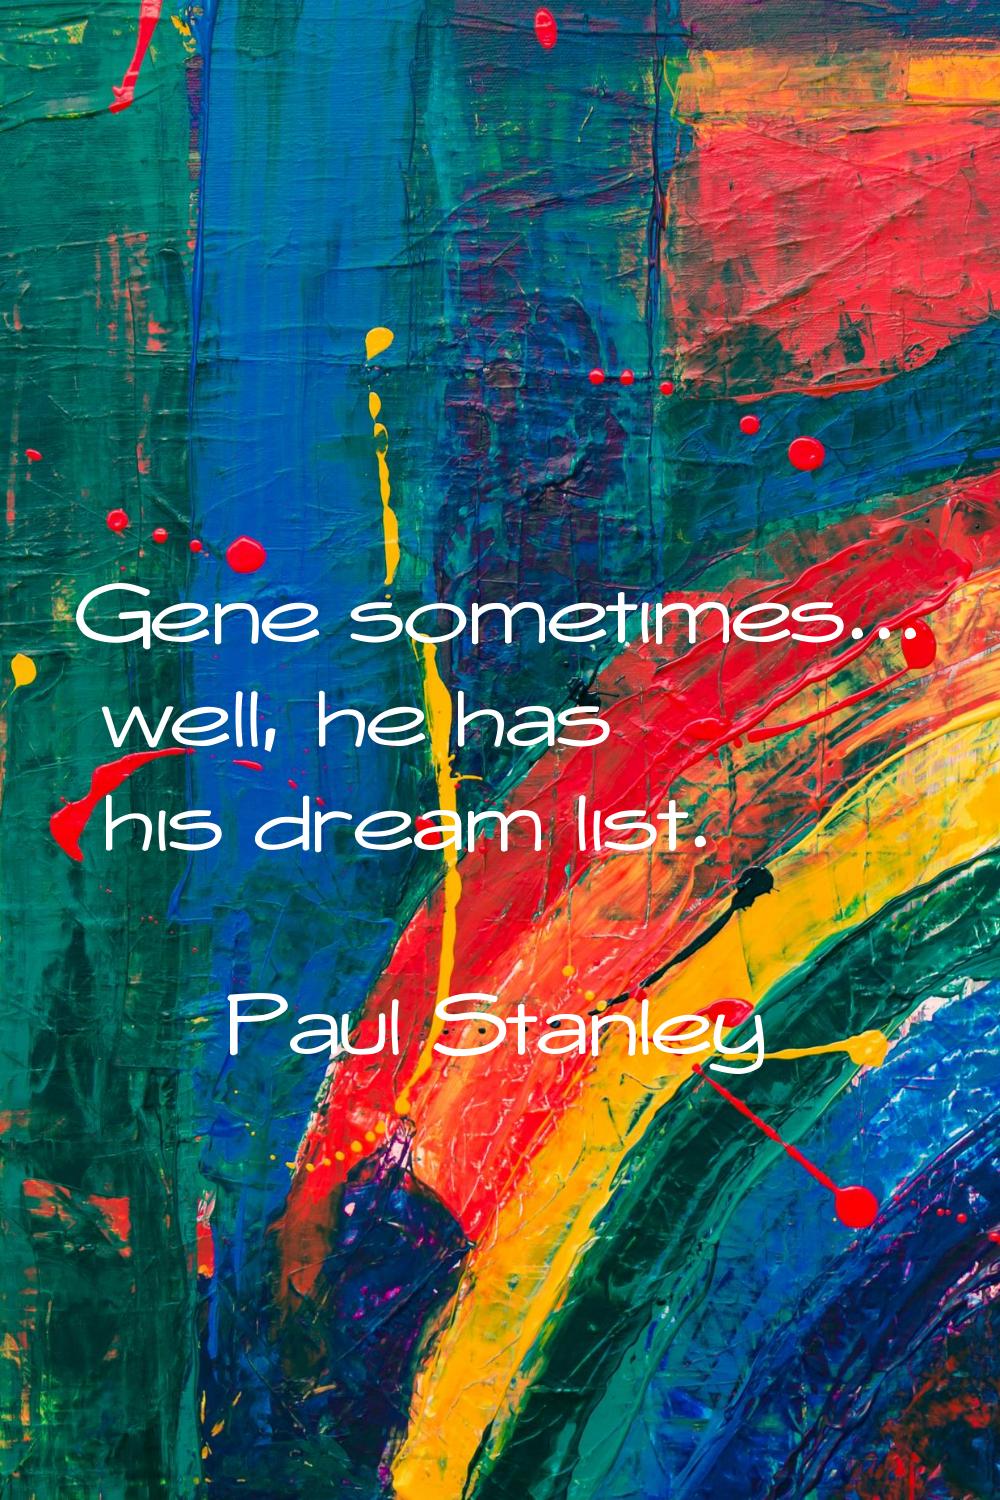 Gene sometimes... well, he has his dream list.